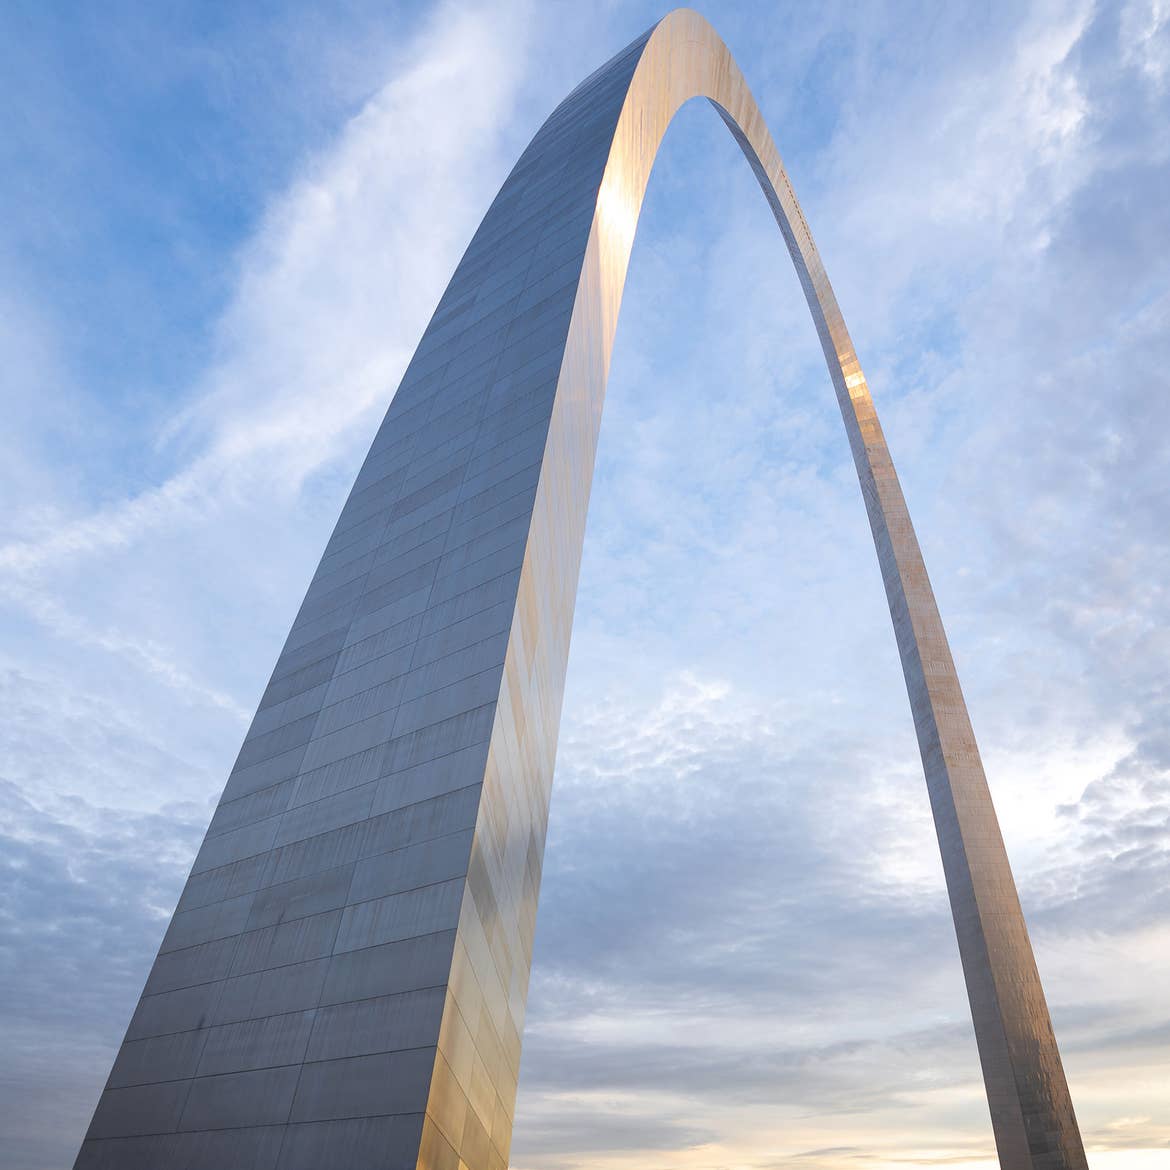 The St. Louis arch in St. Louis, Missouri.